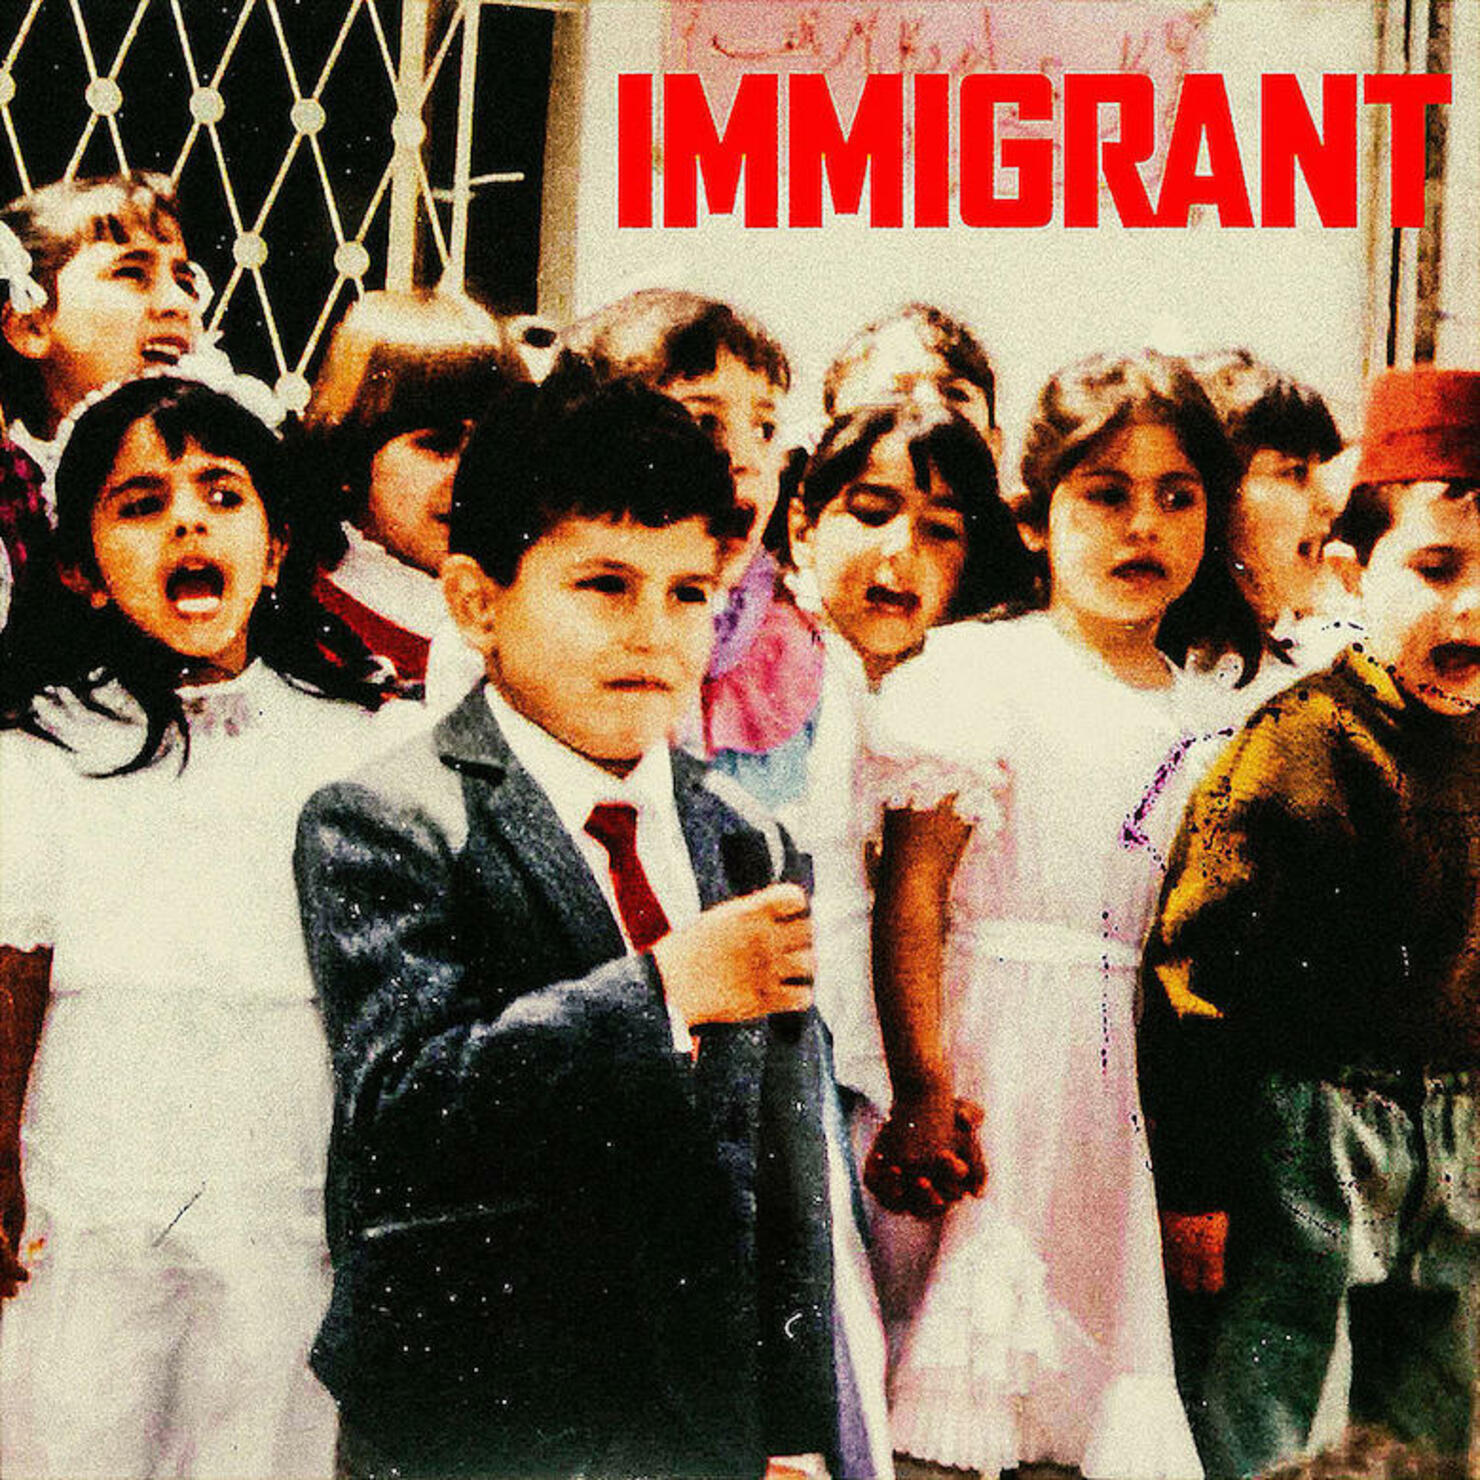 Belly - 'Immigrant' Album Cover Art